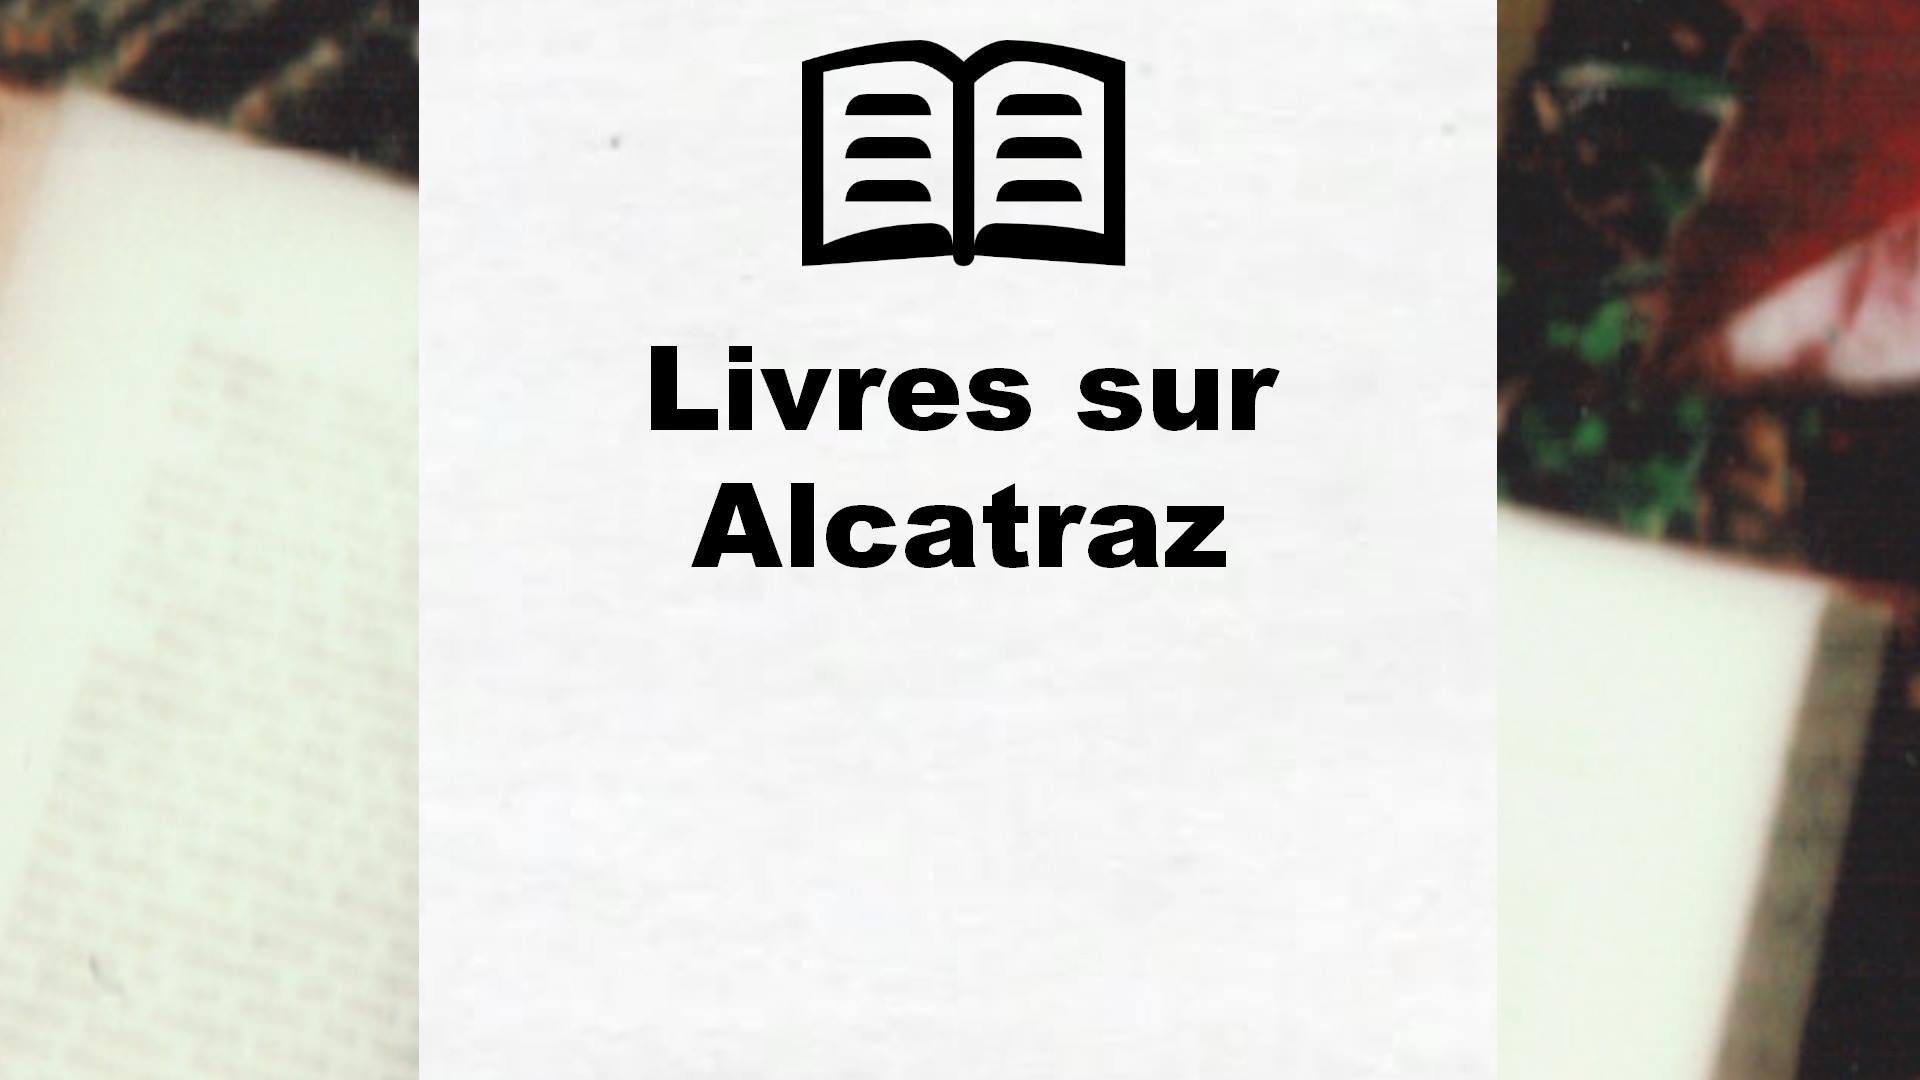 Livres sur Alcatraz